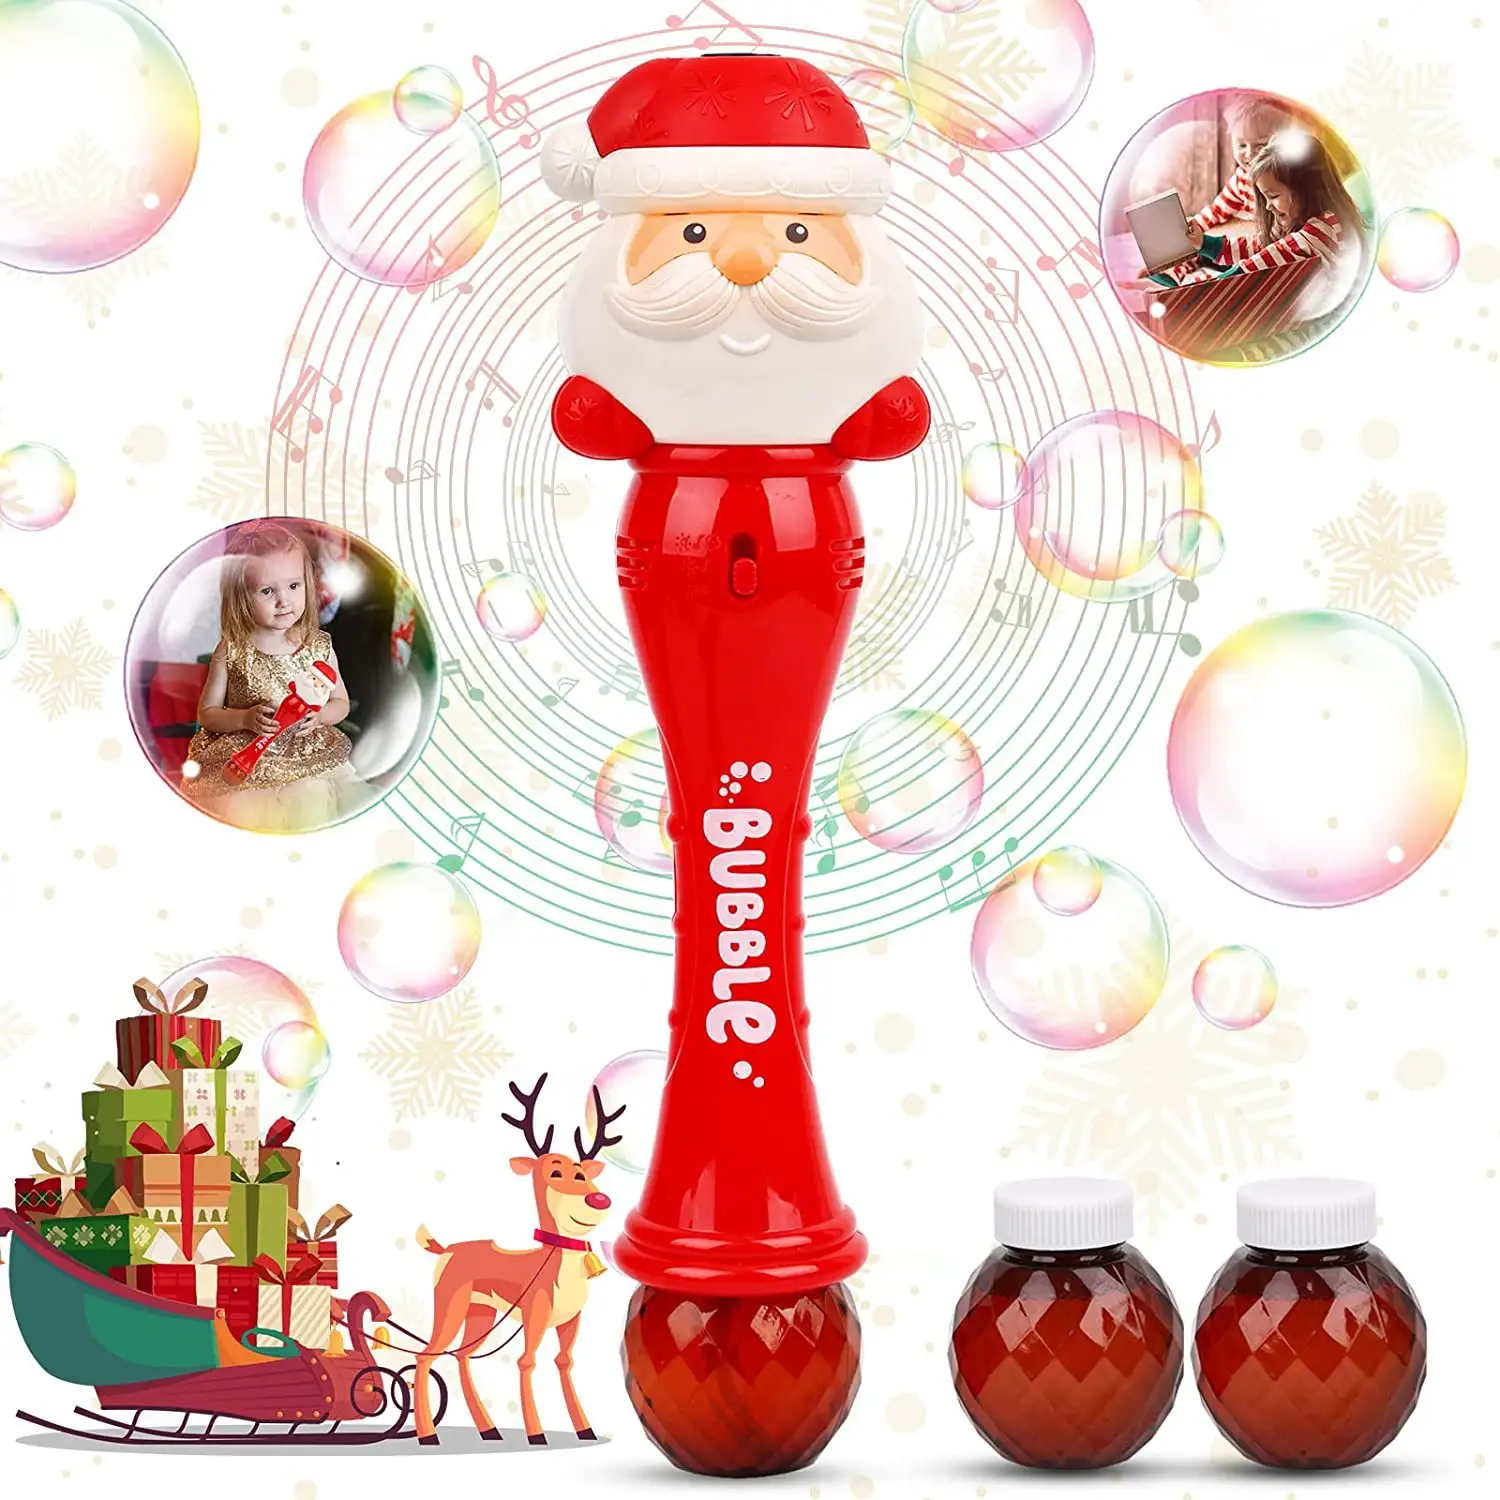 Zhiquおもちゃマジックワンドバブル電気バブルメーカーマシン光と音楽ハンドヘルドサンタクロースバブルおもちゃクリスマス用